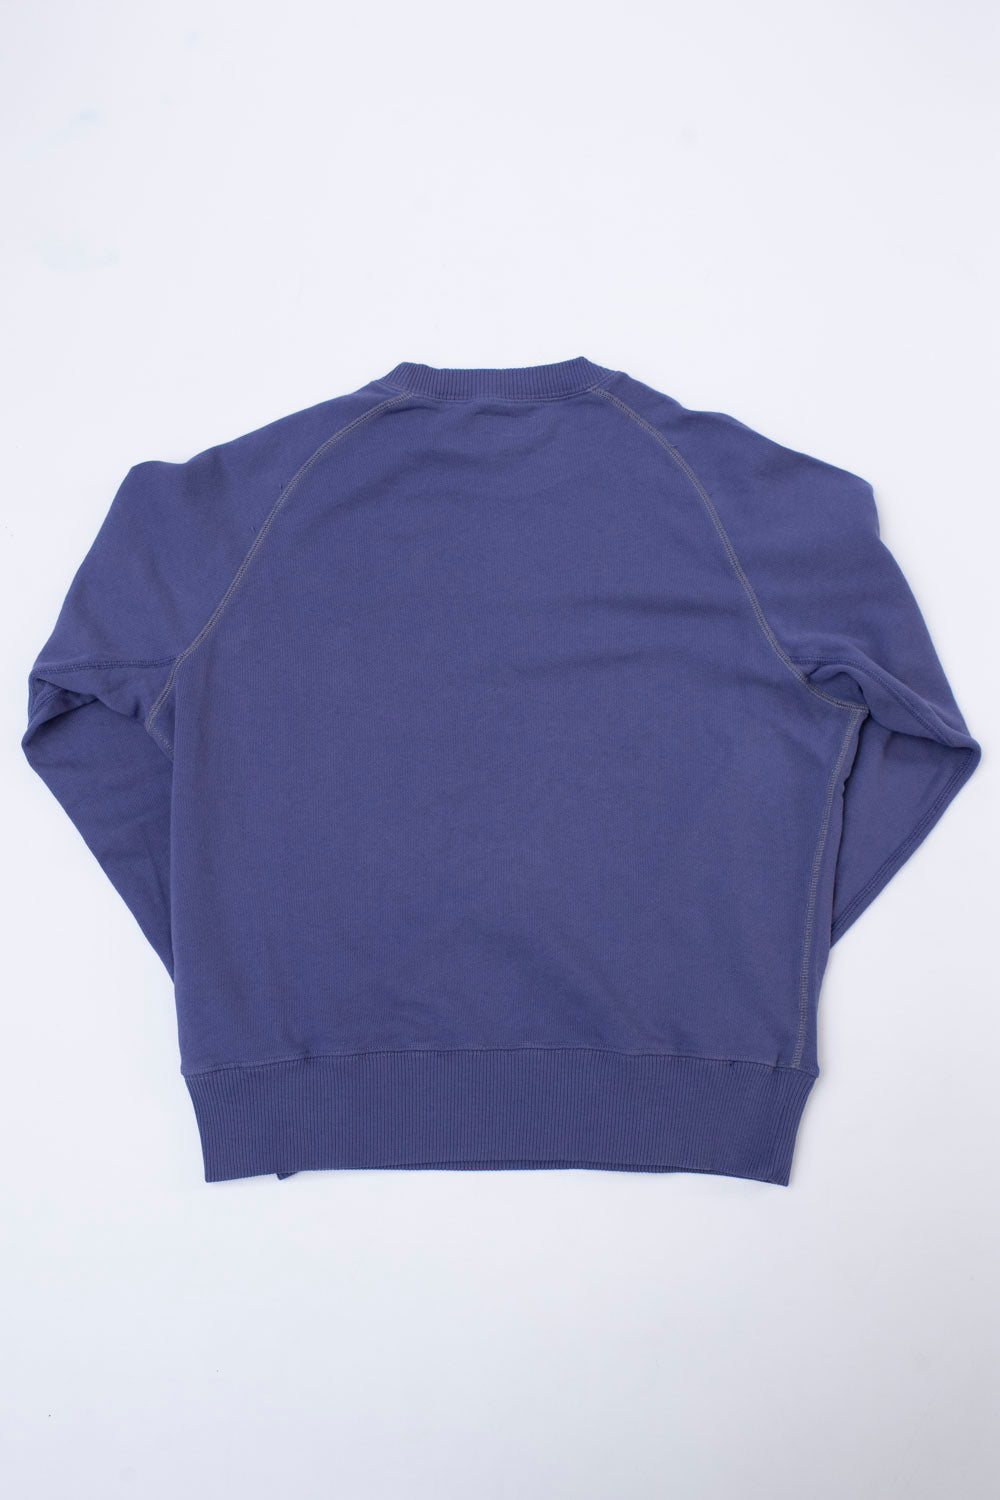 10.6oz Purple Sweatshirt Cotton Fit - James | RGSW01.504 Dant - Blu Organic Relaxed